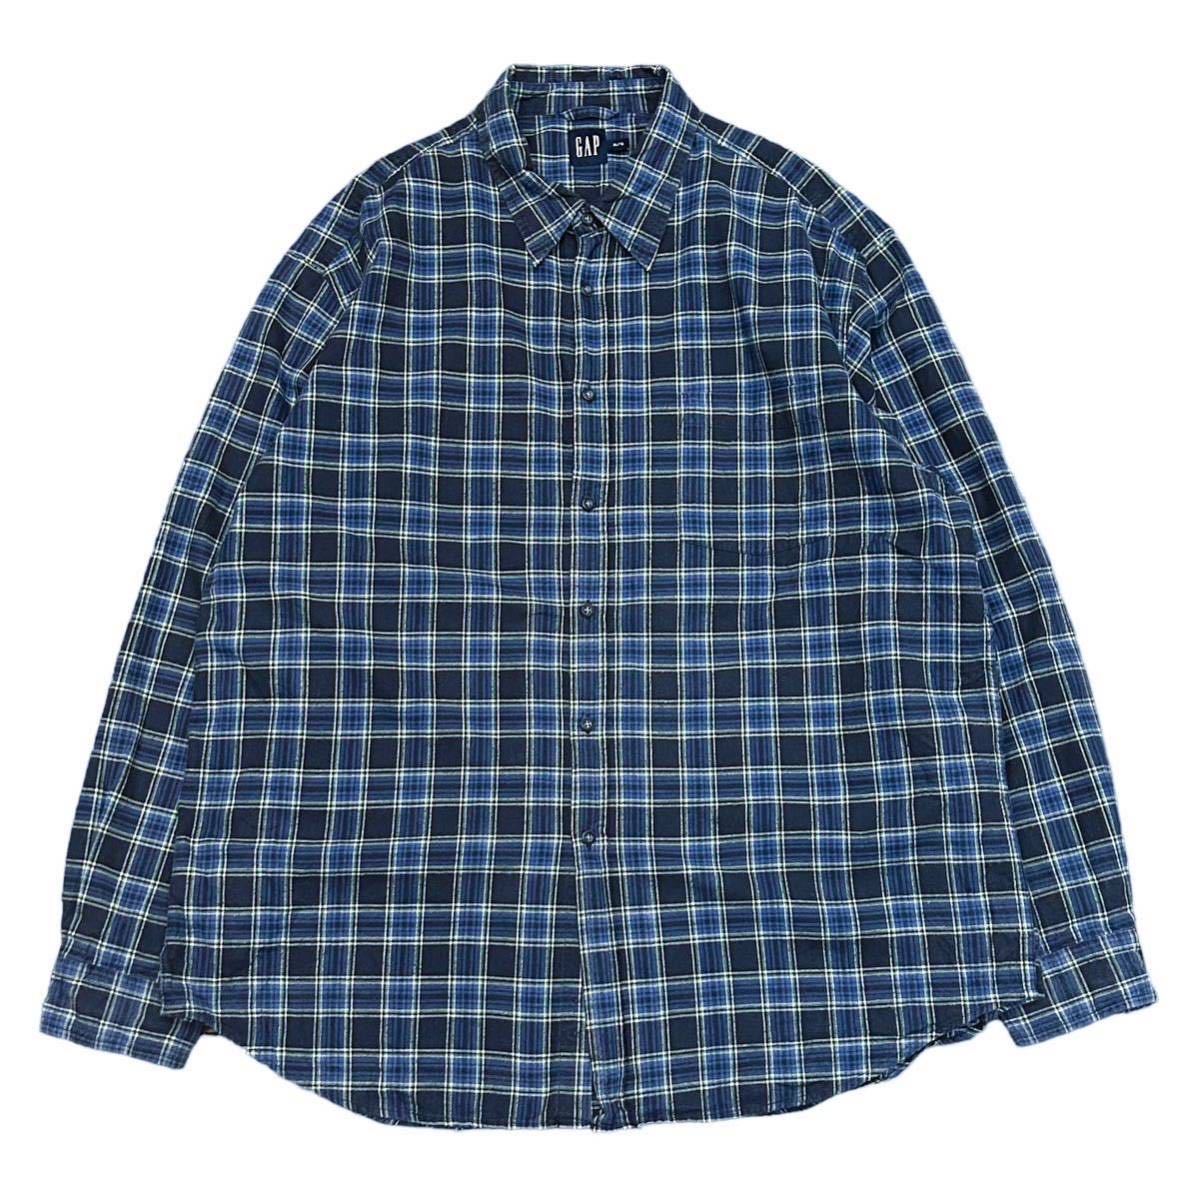 90’s〜 OLD GAP オールドギャップ 長袖 チェックシャツ XLサイズ コットン 青 ブルー グリーン ライトネルシャツ インド綿 タータン